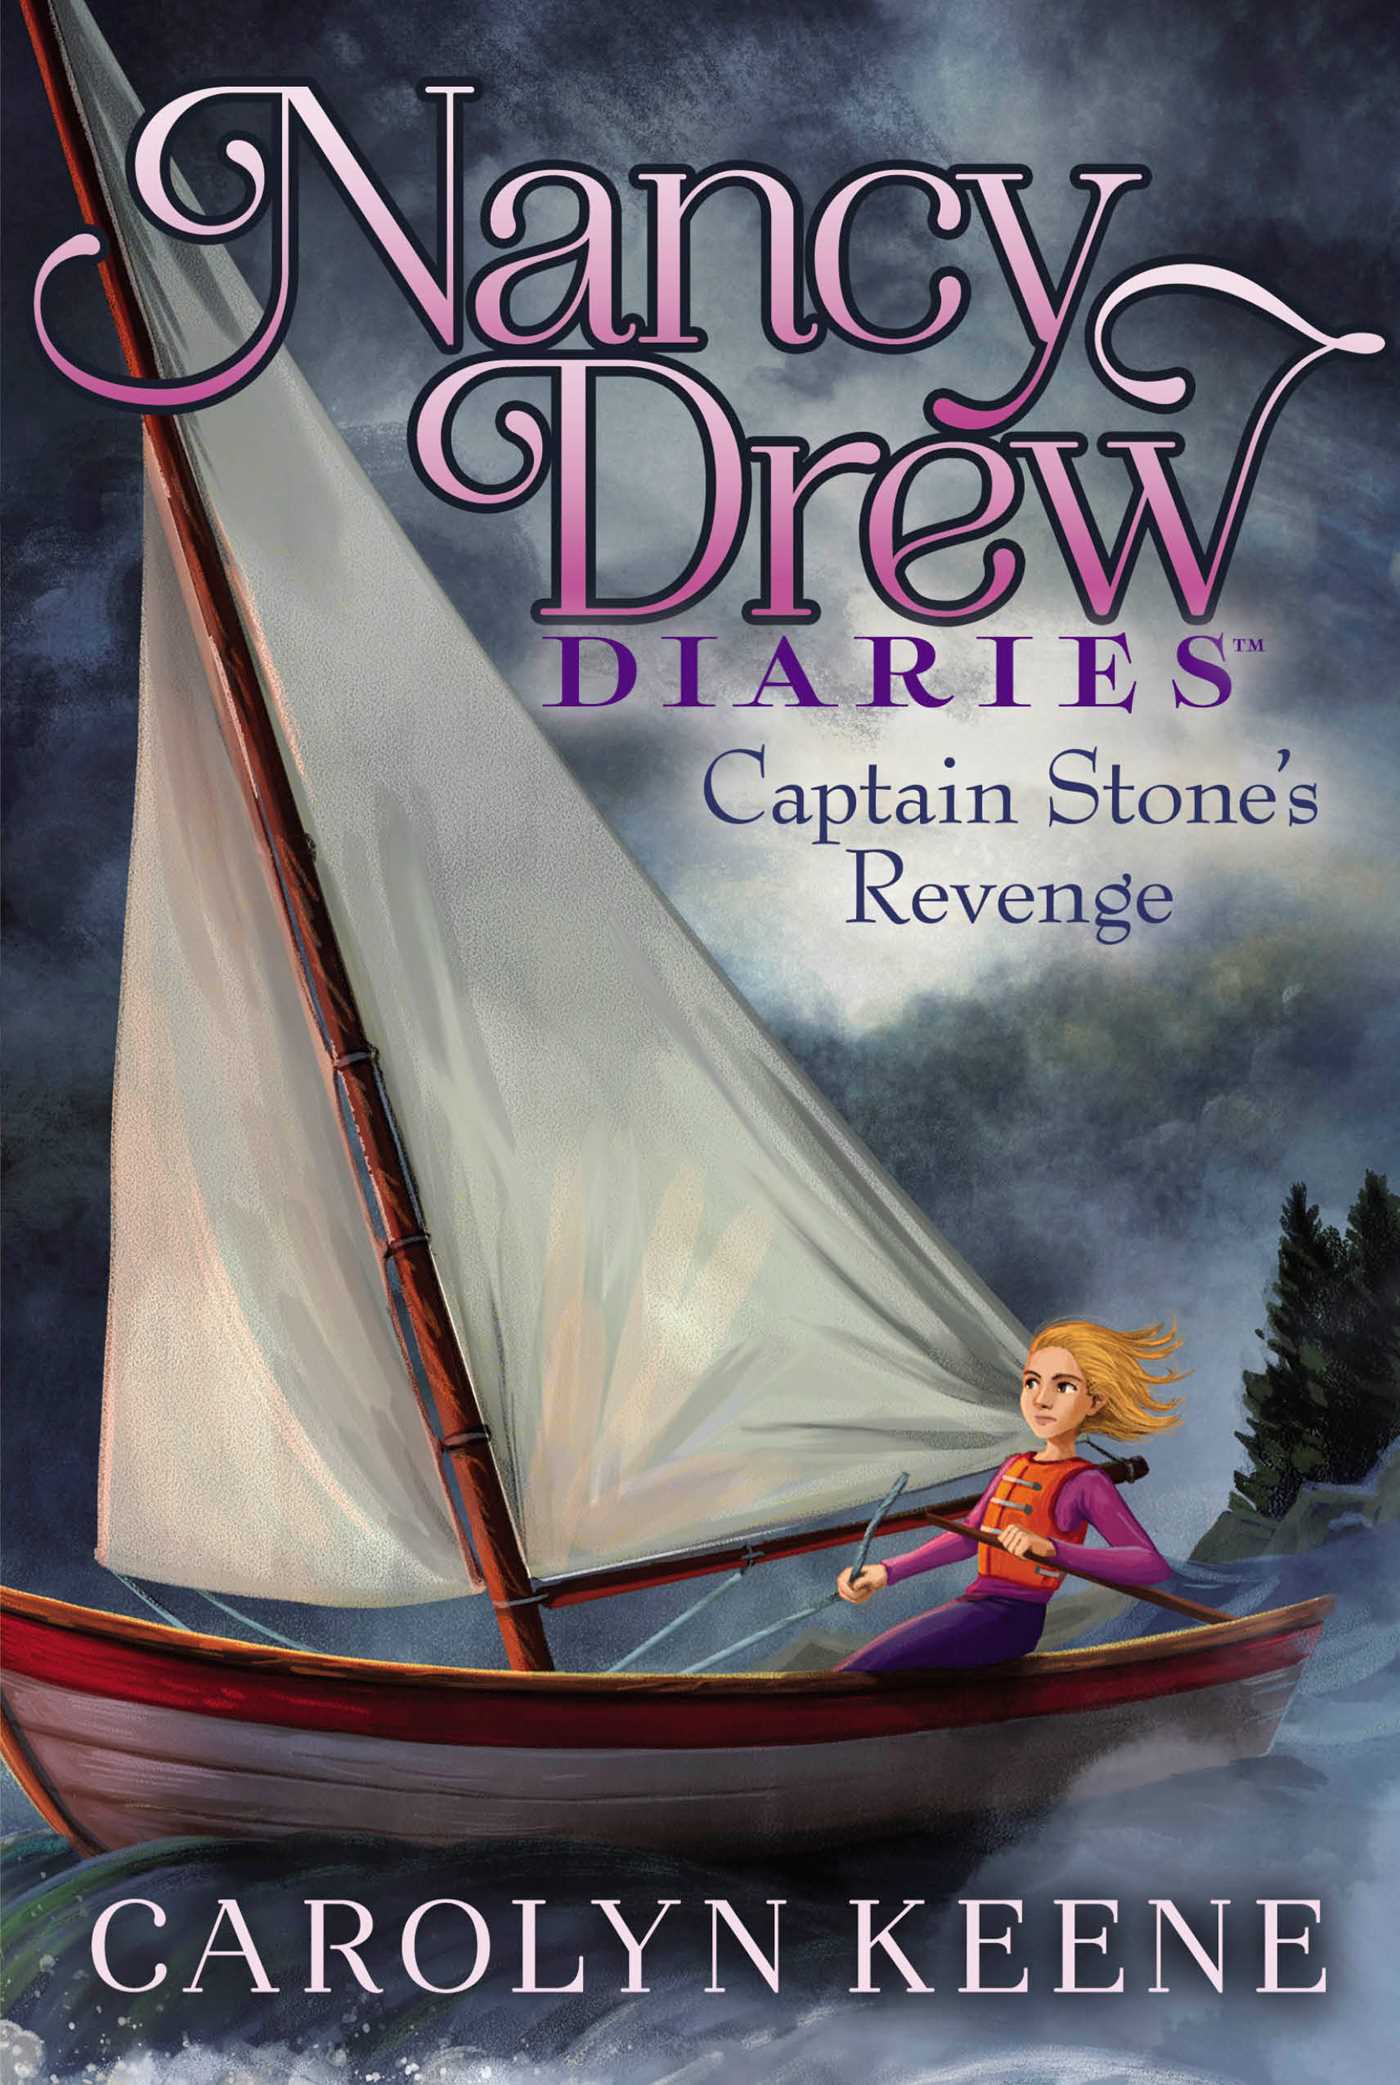 Nancy Drew Diaries #24 Captain Stone’s Revenge ~ Cover Art, Synopsis, Details